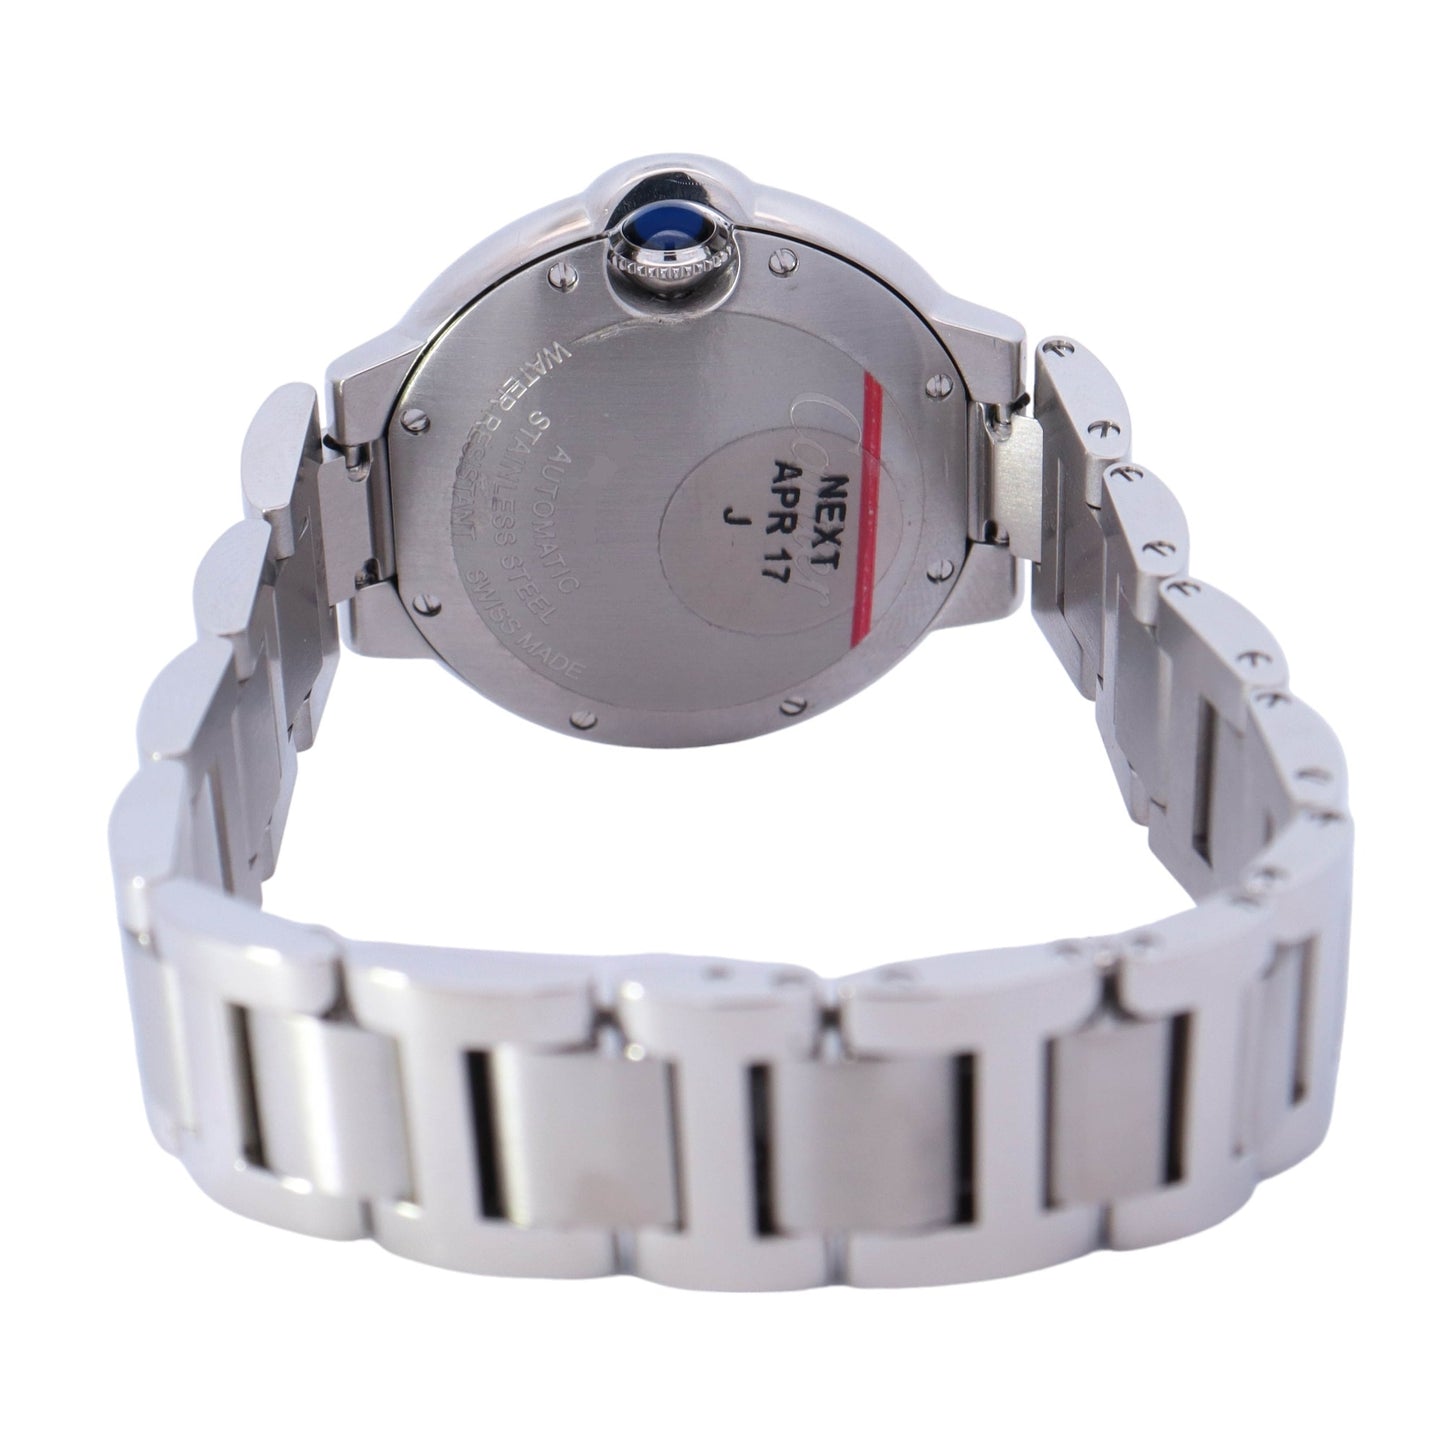 Cartier Ballon Bleu Stainless Steel 33mm White Roman Dial Watch Reference # W6920071